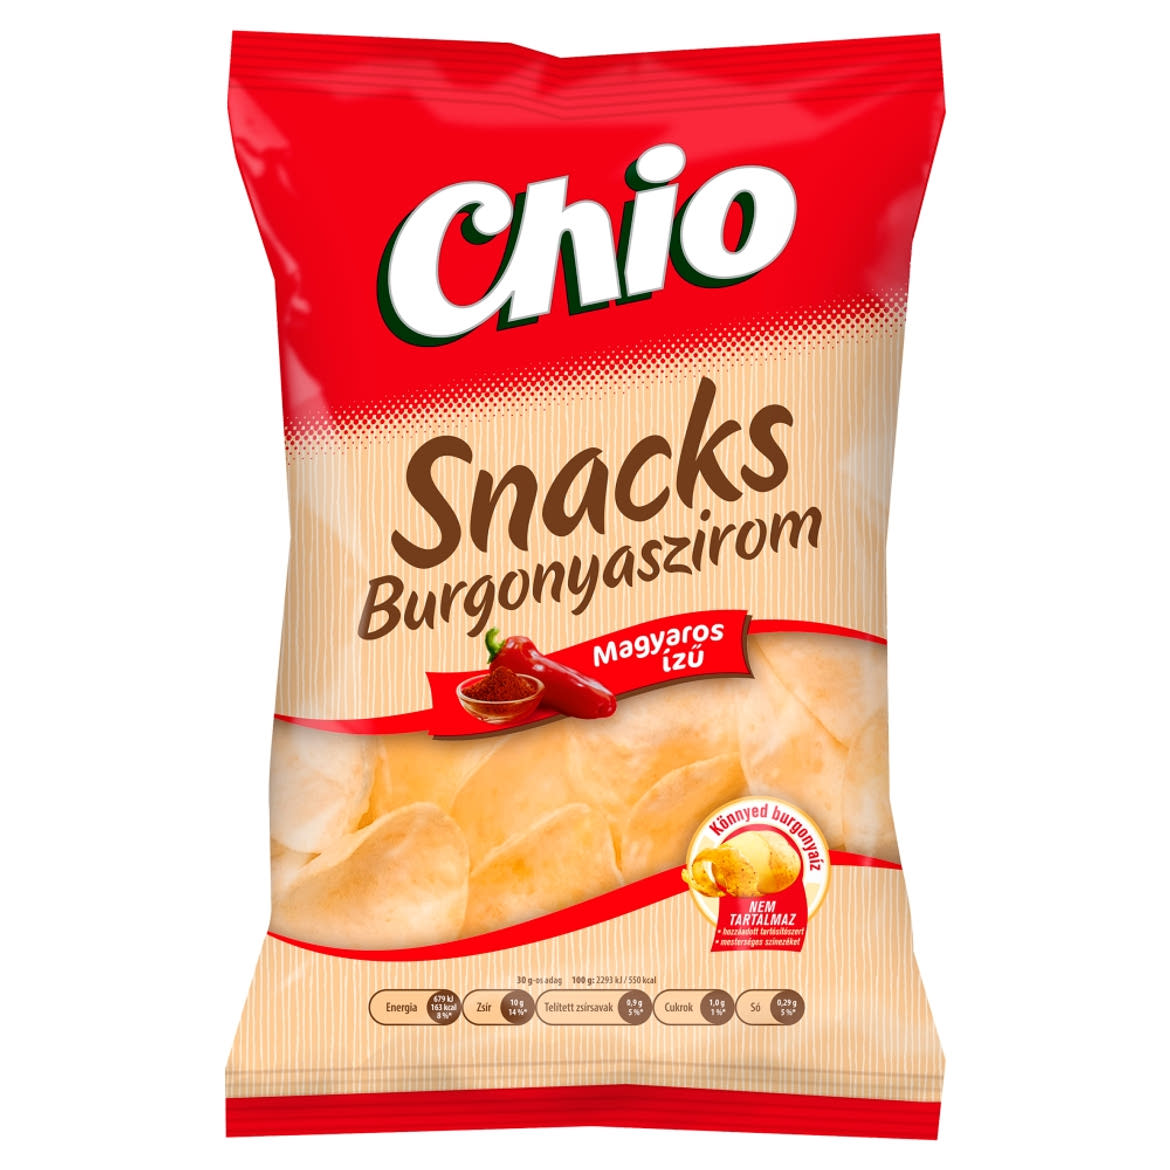 Chio Snacks magyaros ízű hagyományos burgonyaszirom